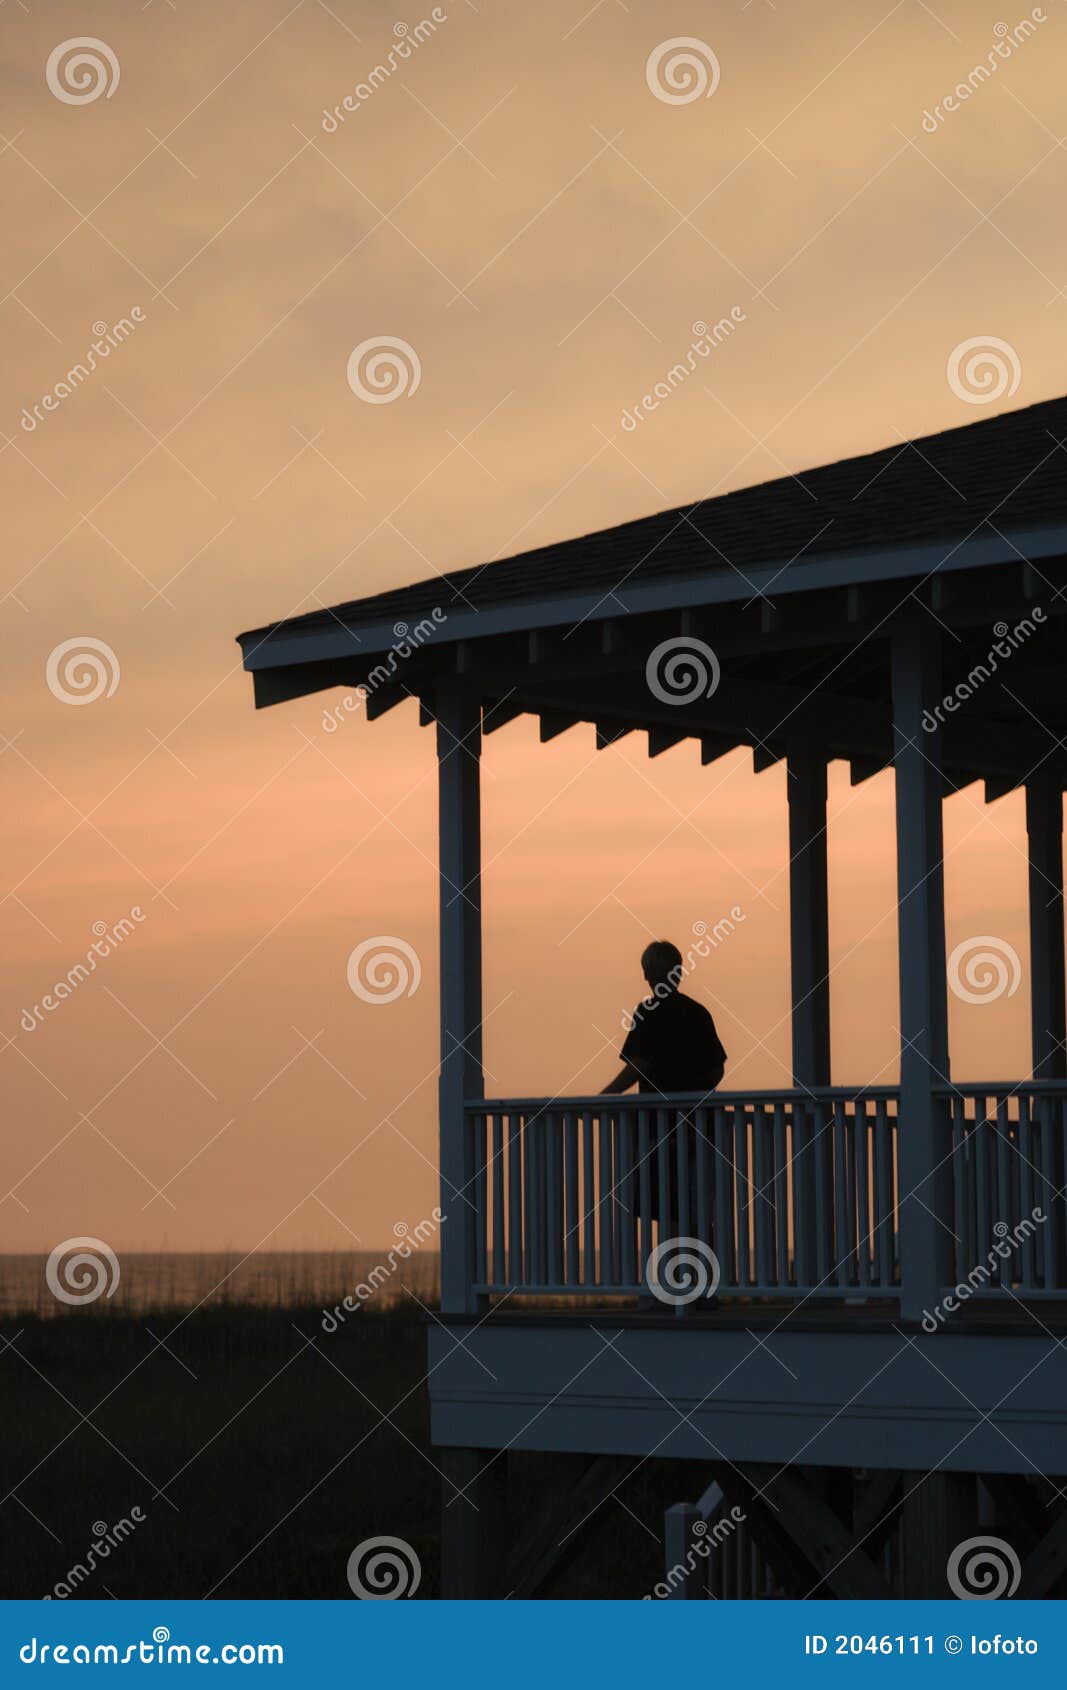 boy on beachfront porch